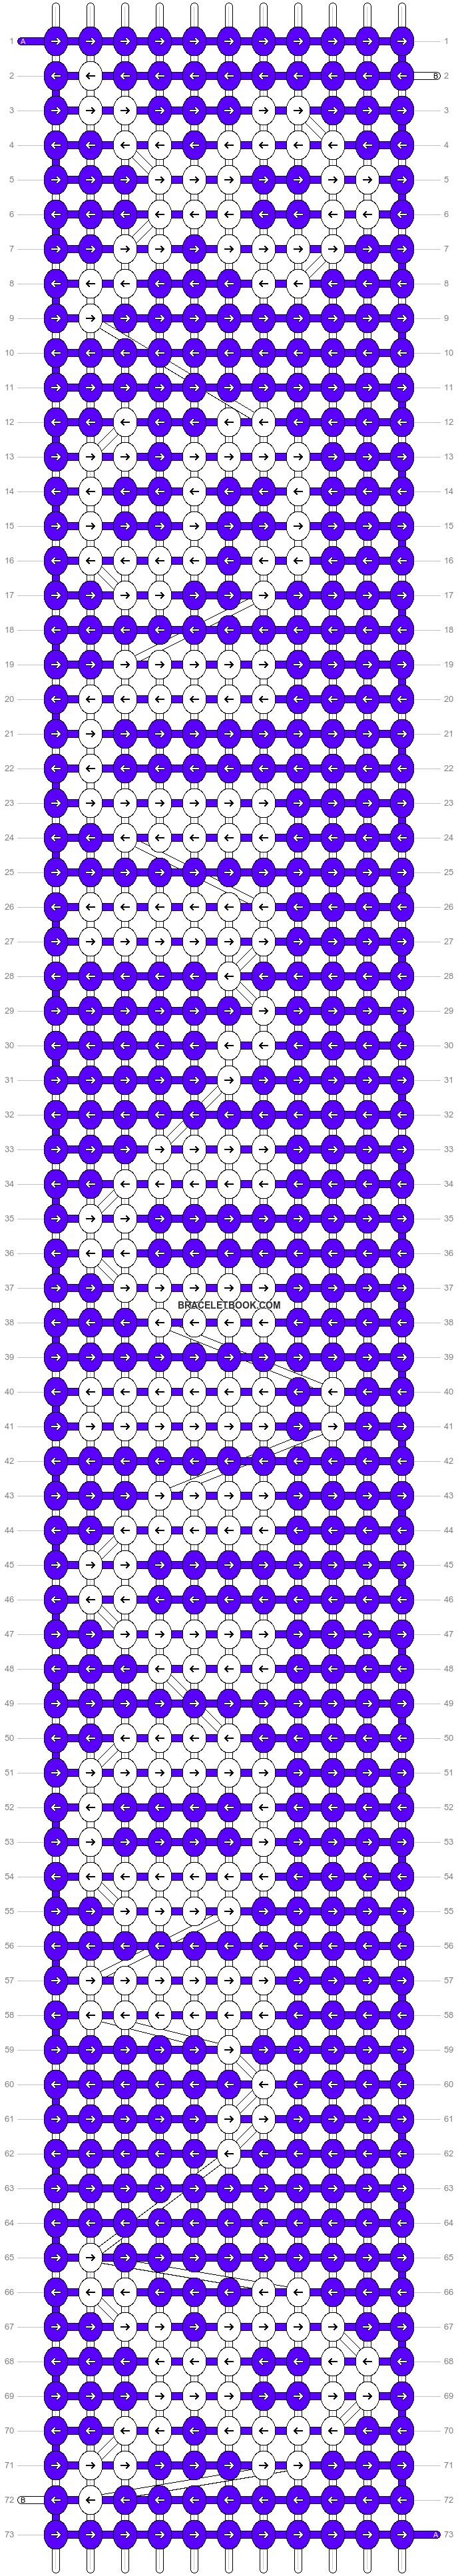 Alpha pattern #11594 variation #56557 pattern